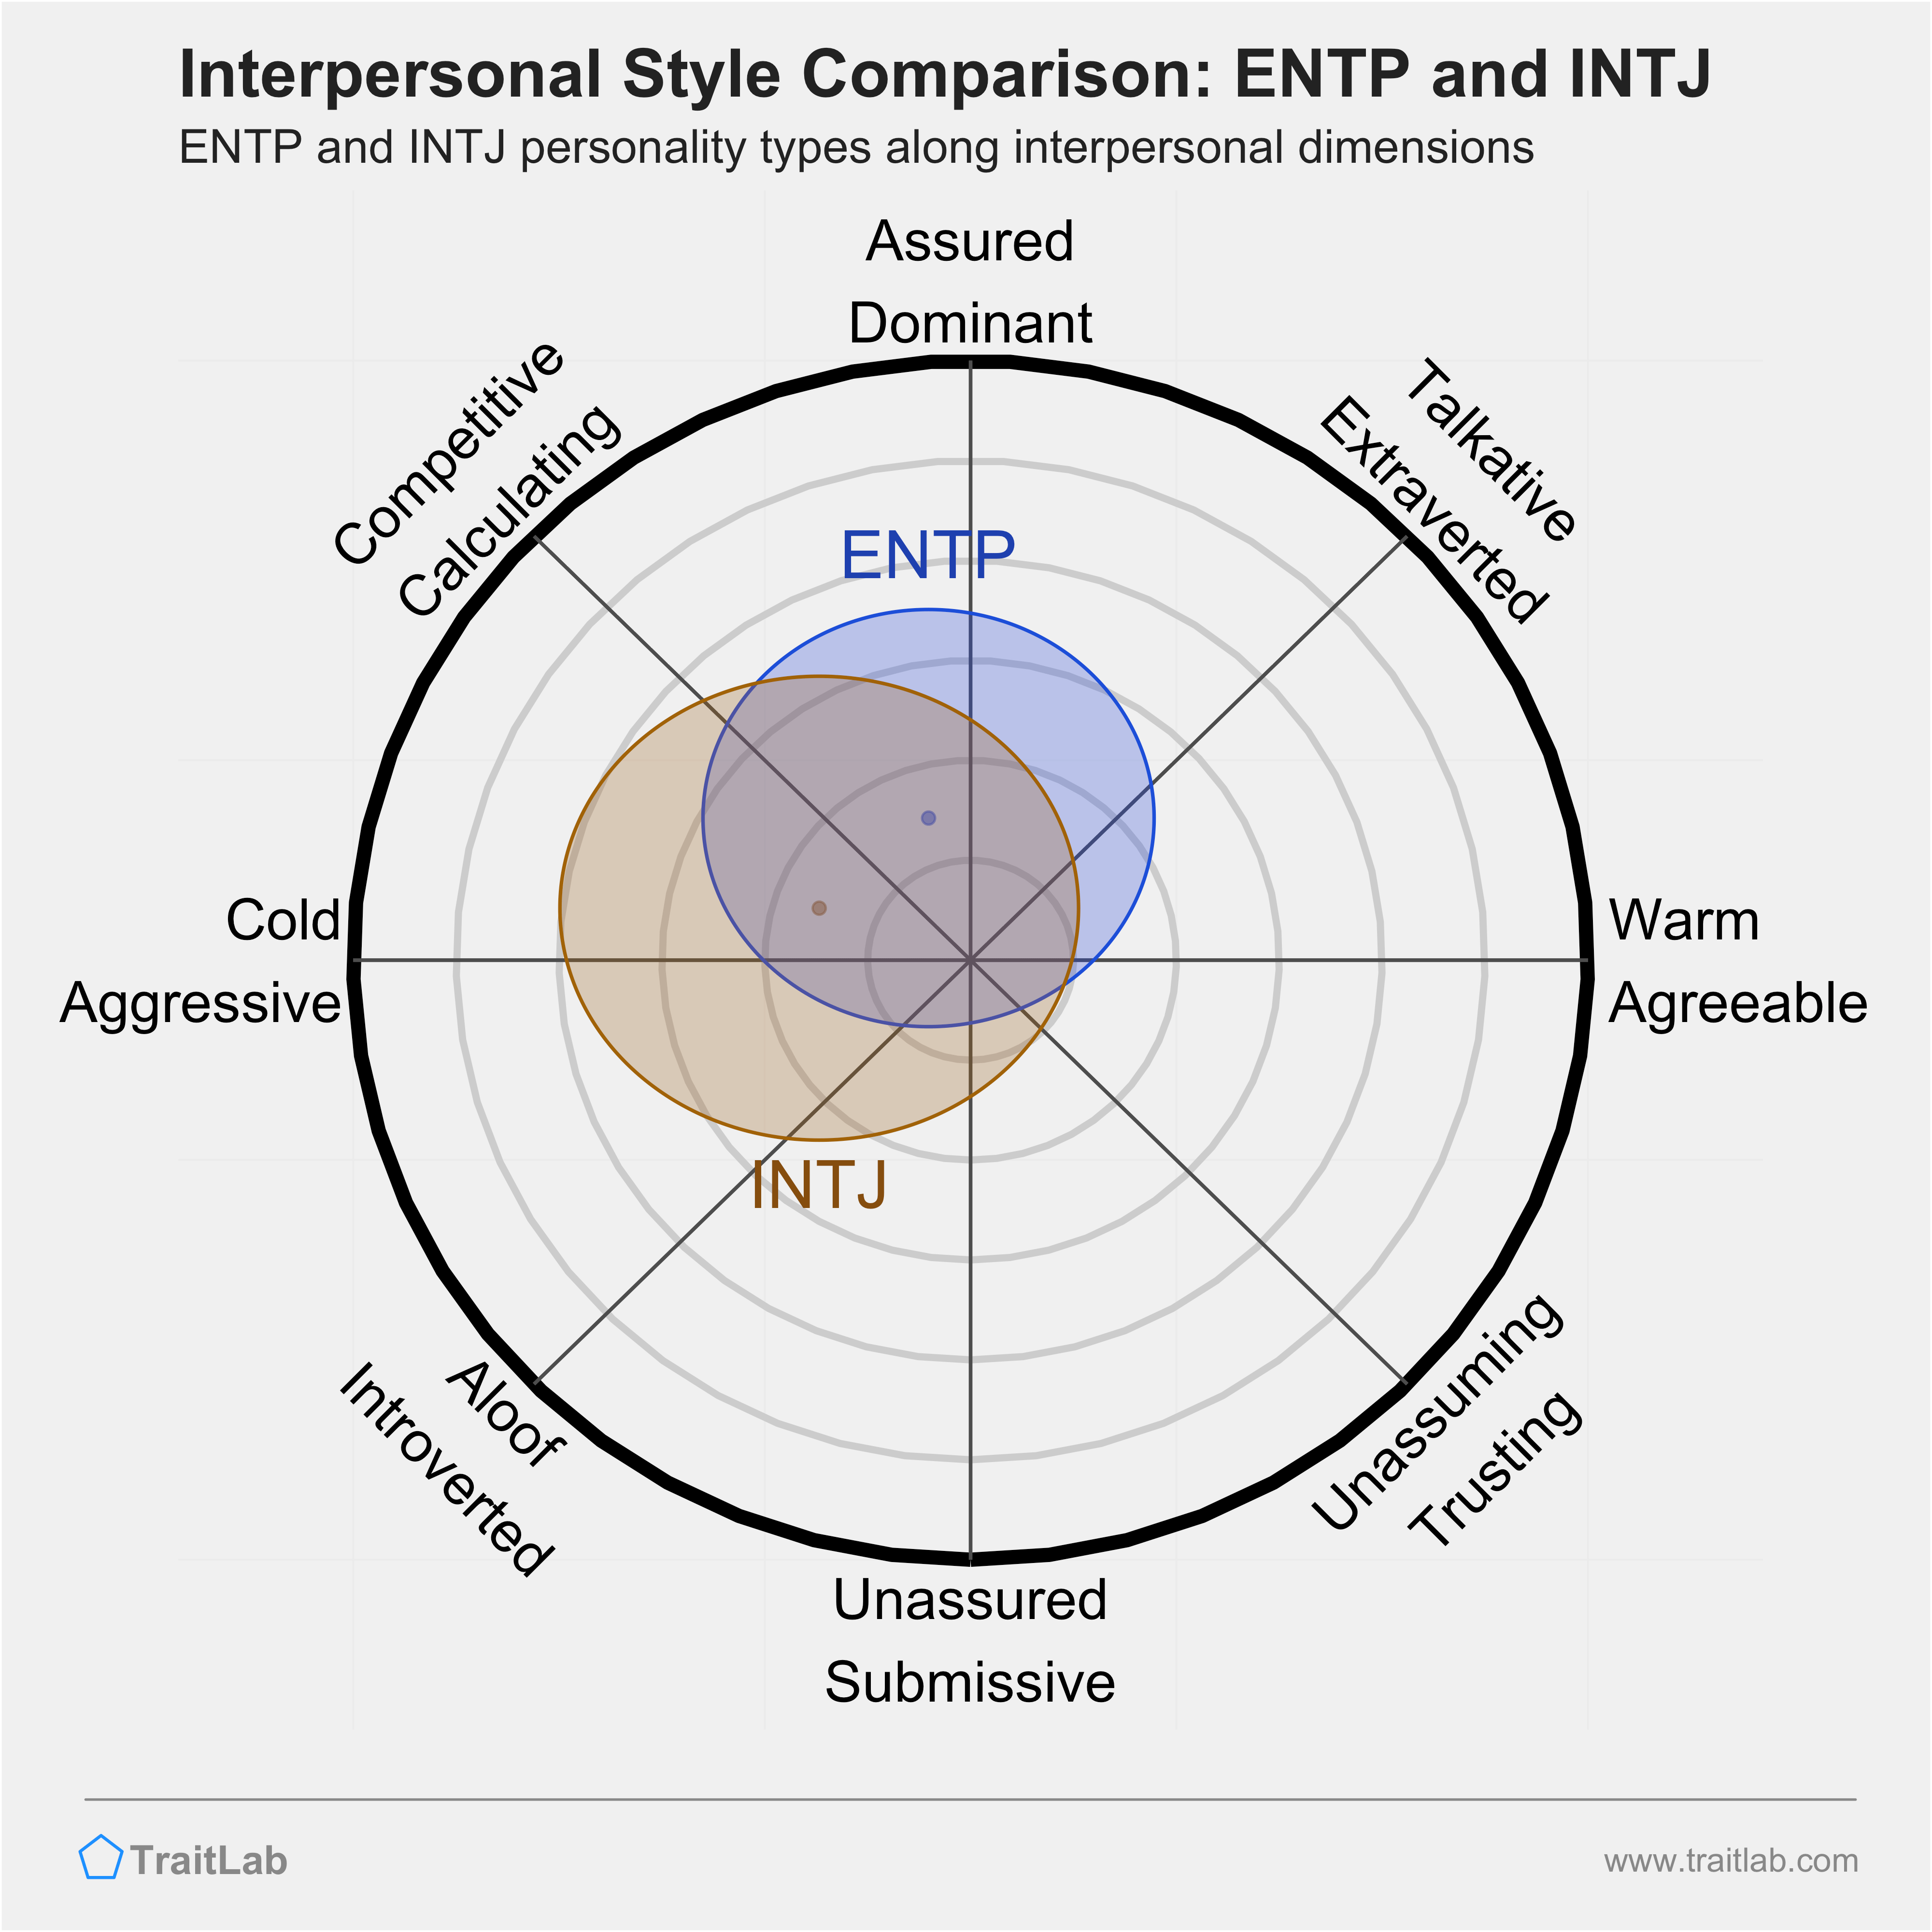 ENTP and INTJ comparison across interpersonal dimensions